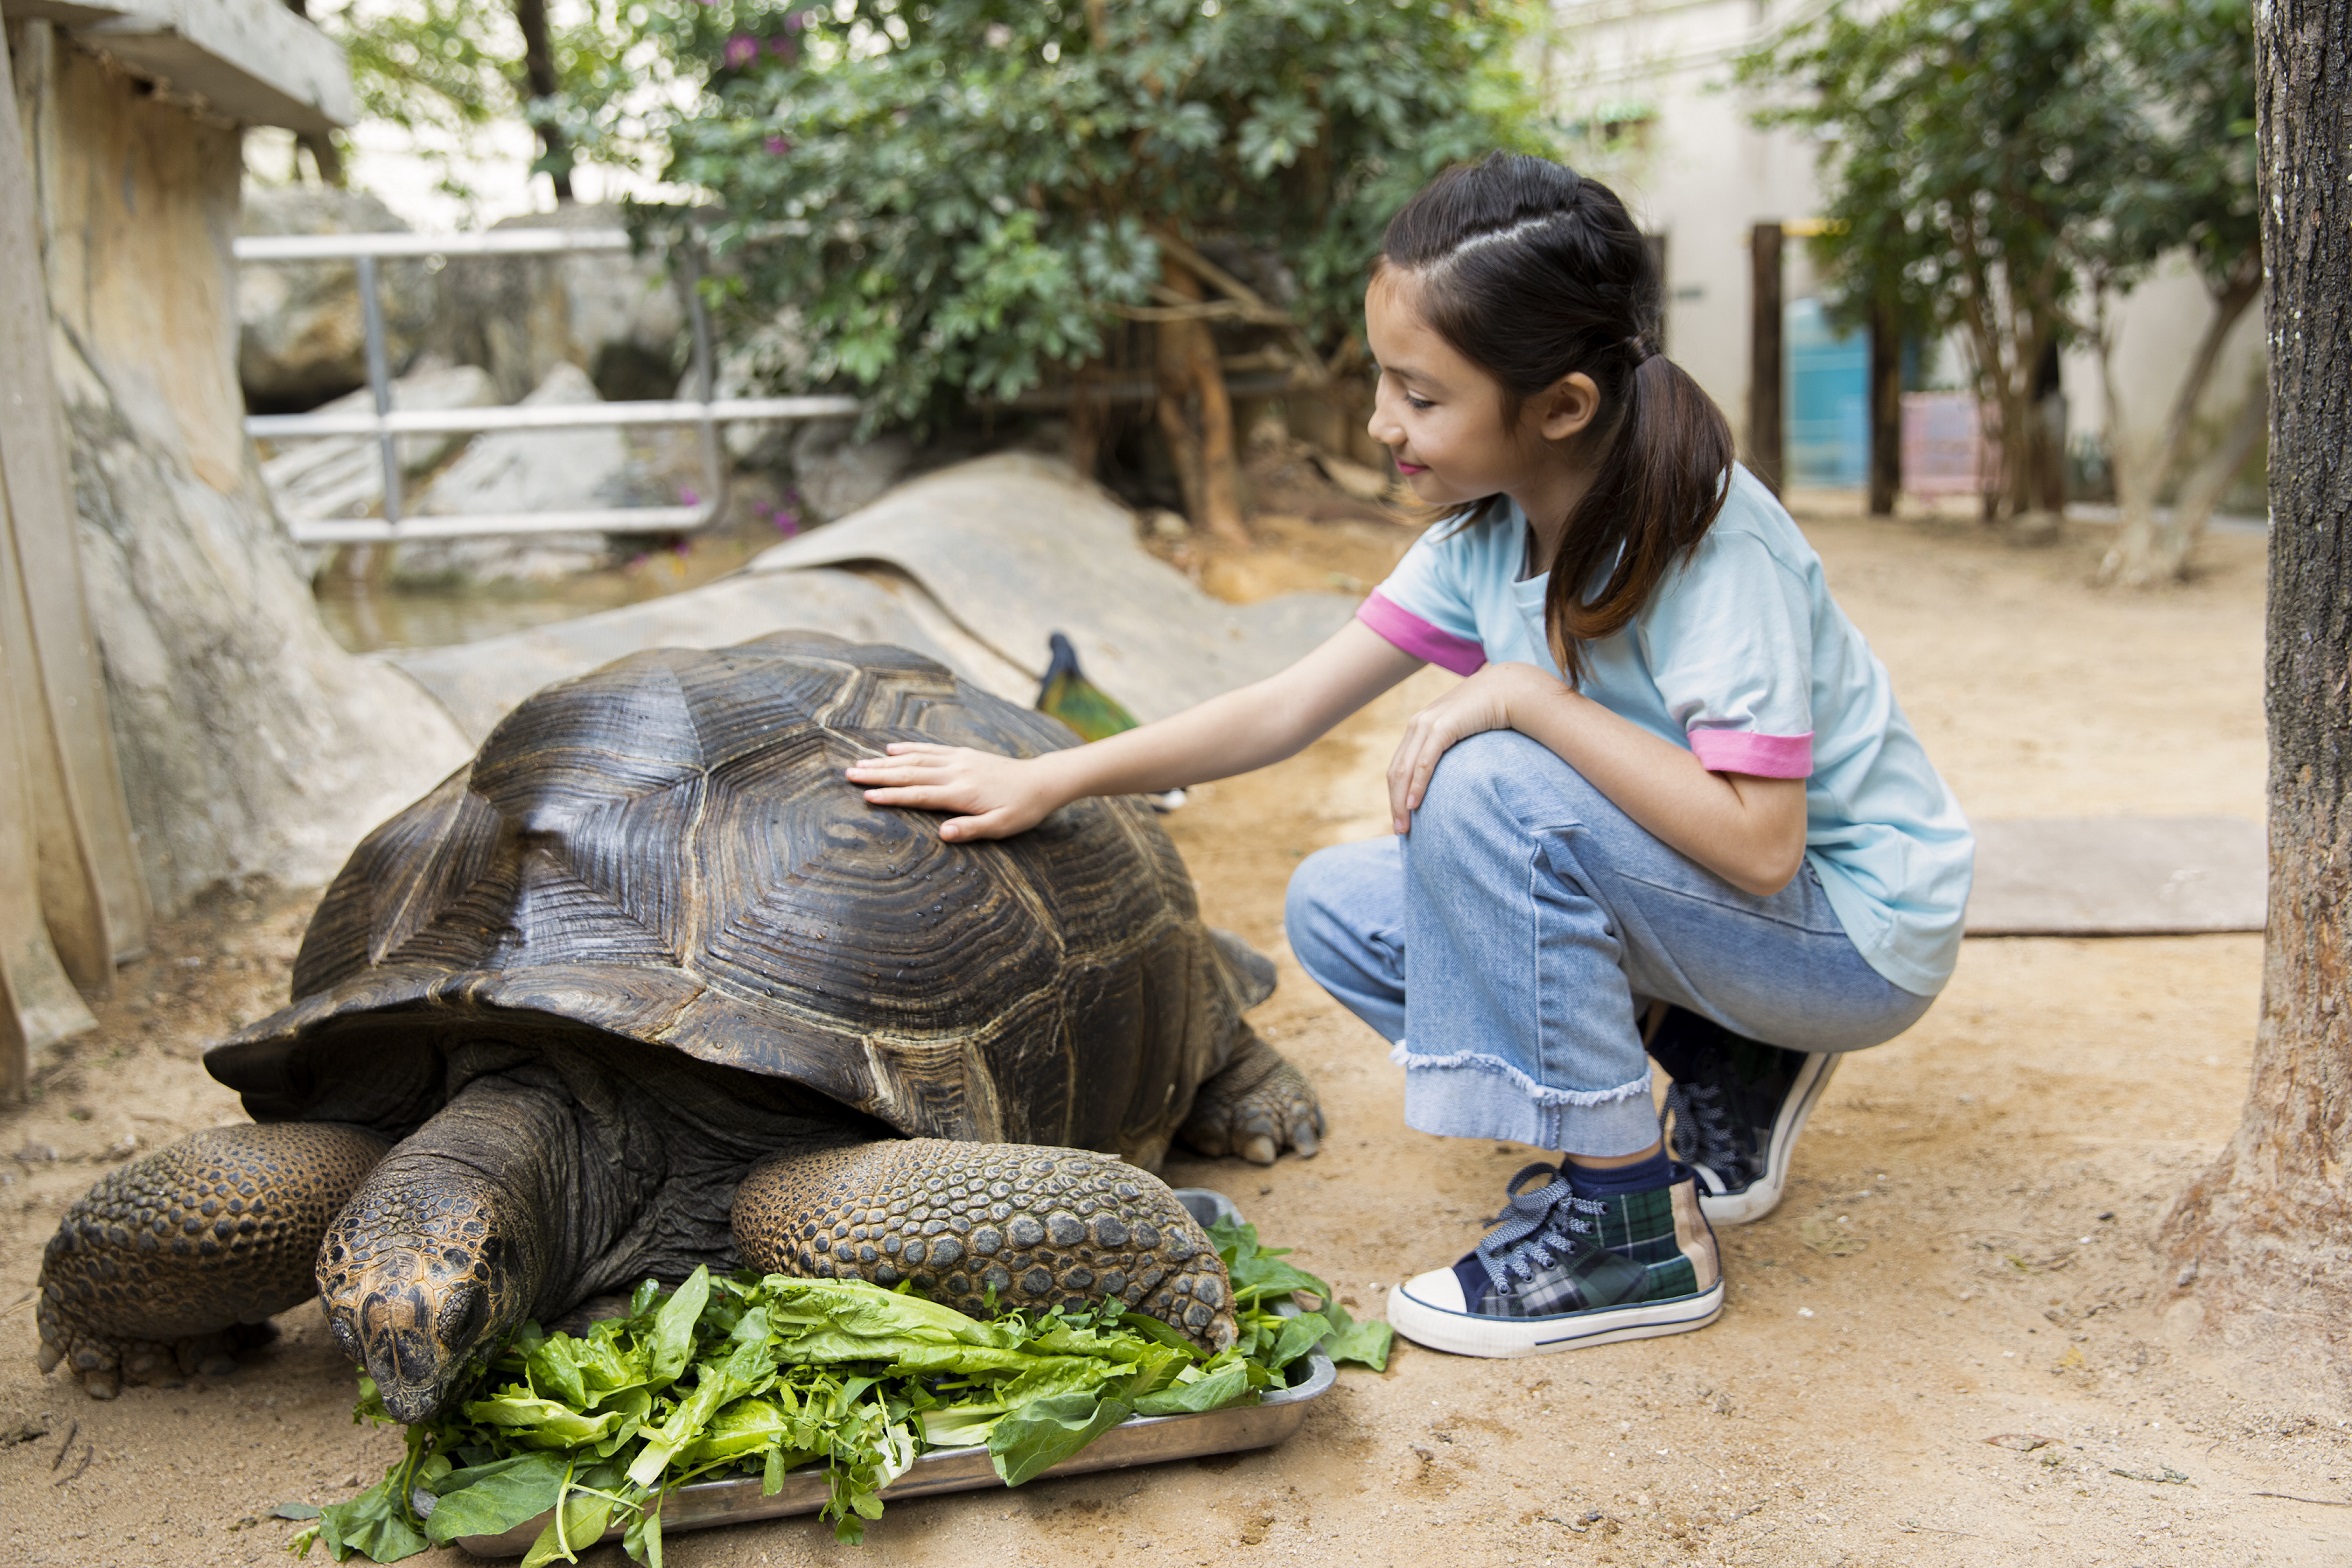 Meet the Giant Tortoise